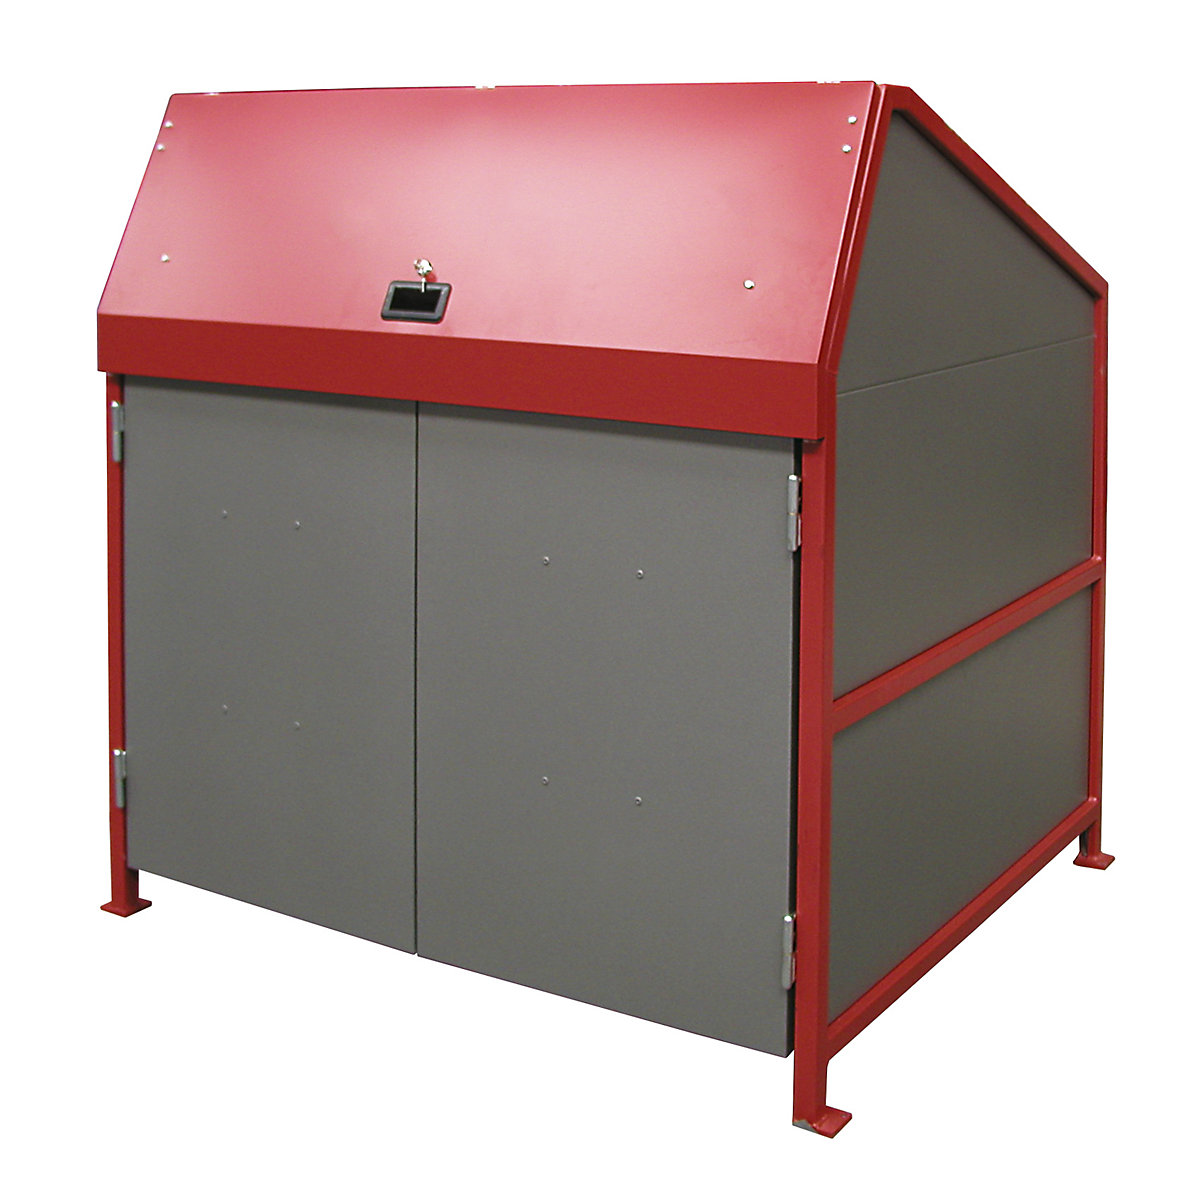 EUROKRAFTpro – Waste bin enclosures, enclosed on 4 sides, with doors, frame in red